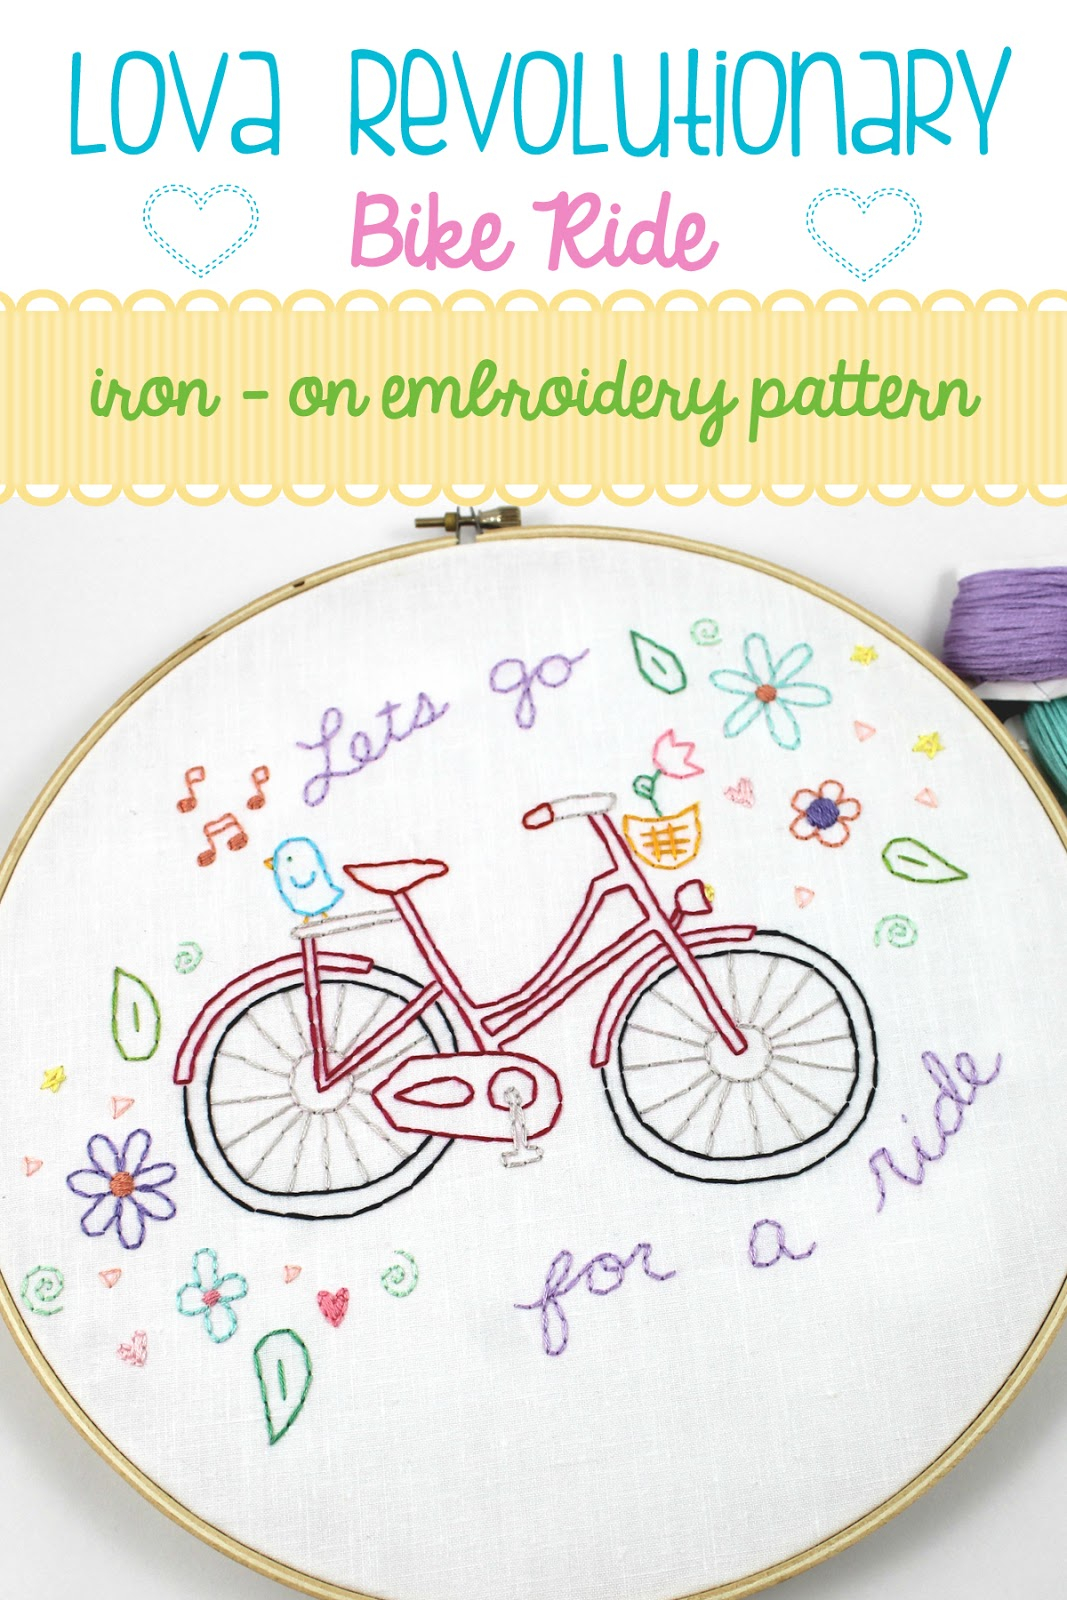 Embroidery Iron On Patterns Lova Revolutionary Blog Iron On Embroidery Patterns Now Available